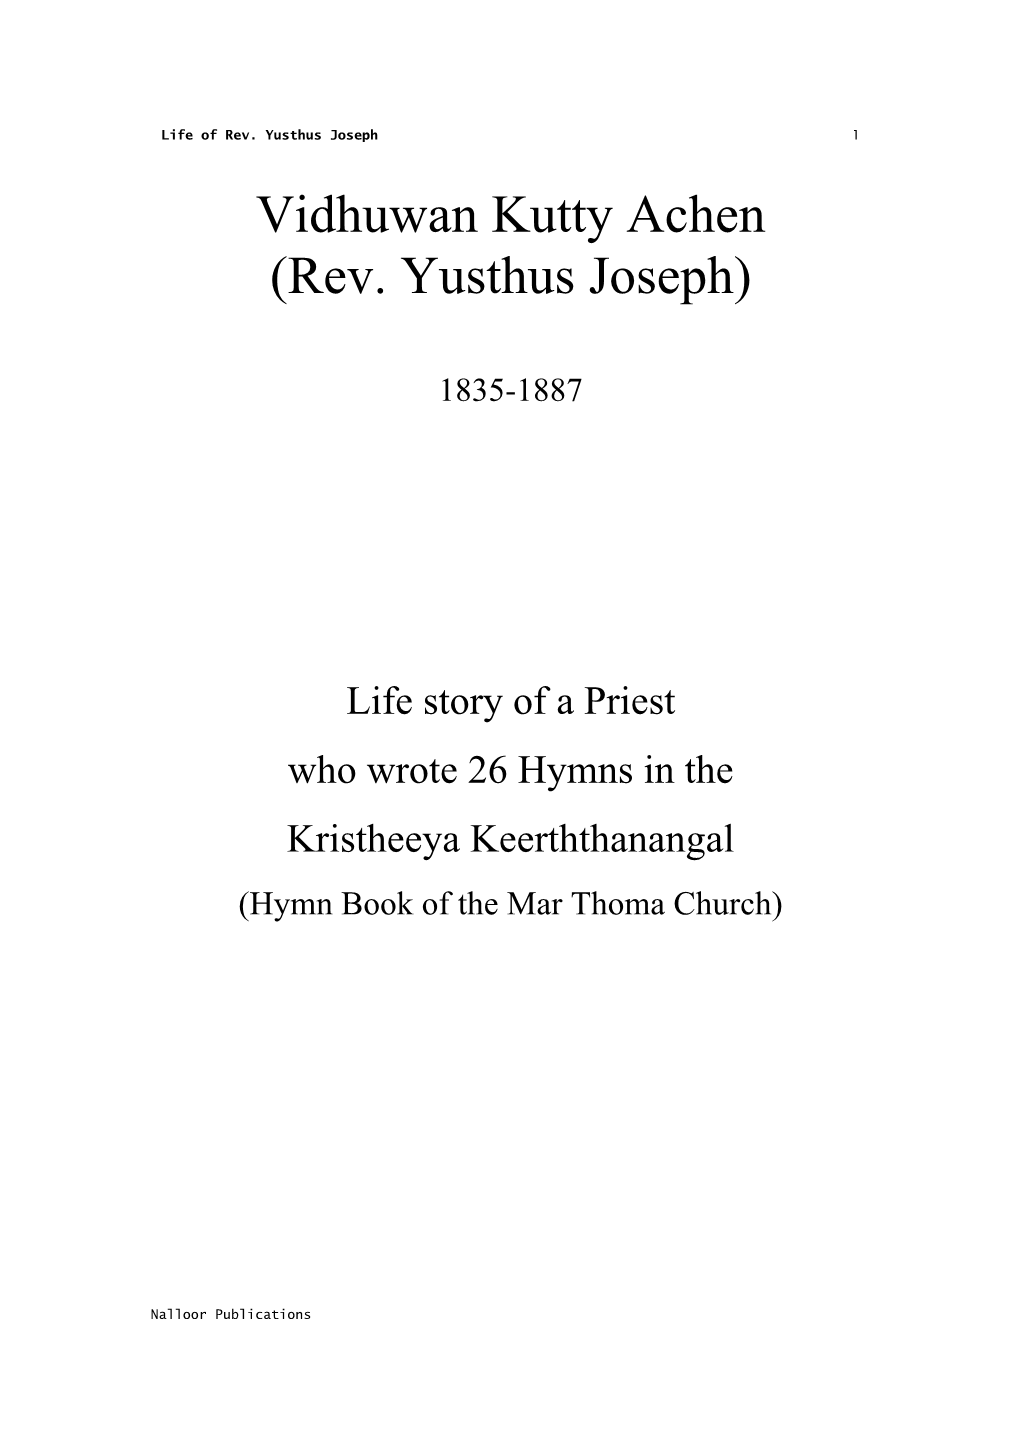 Vidhuwan Kutty Achen (Rev. Yusthus Joseph)